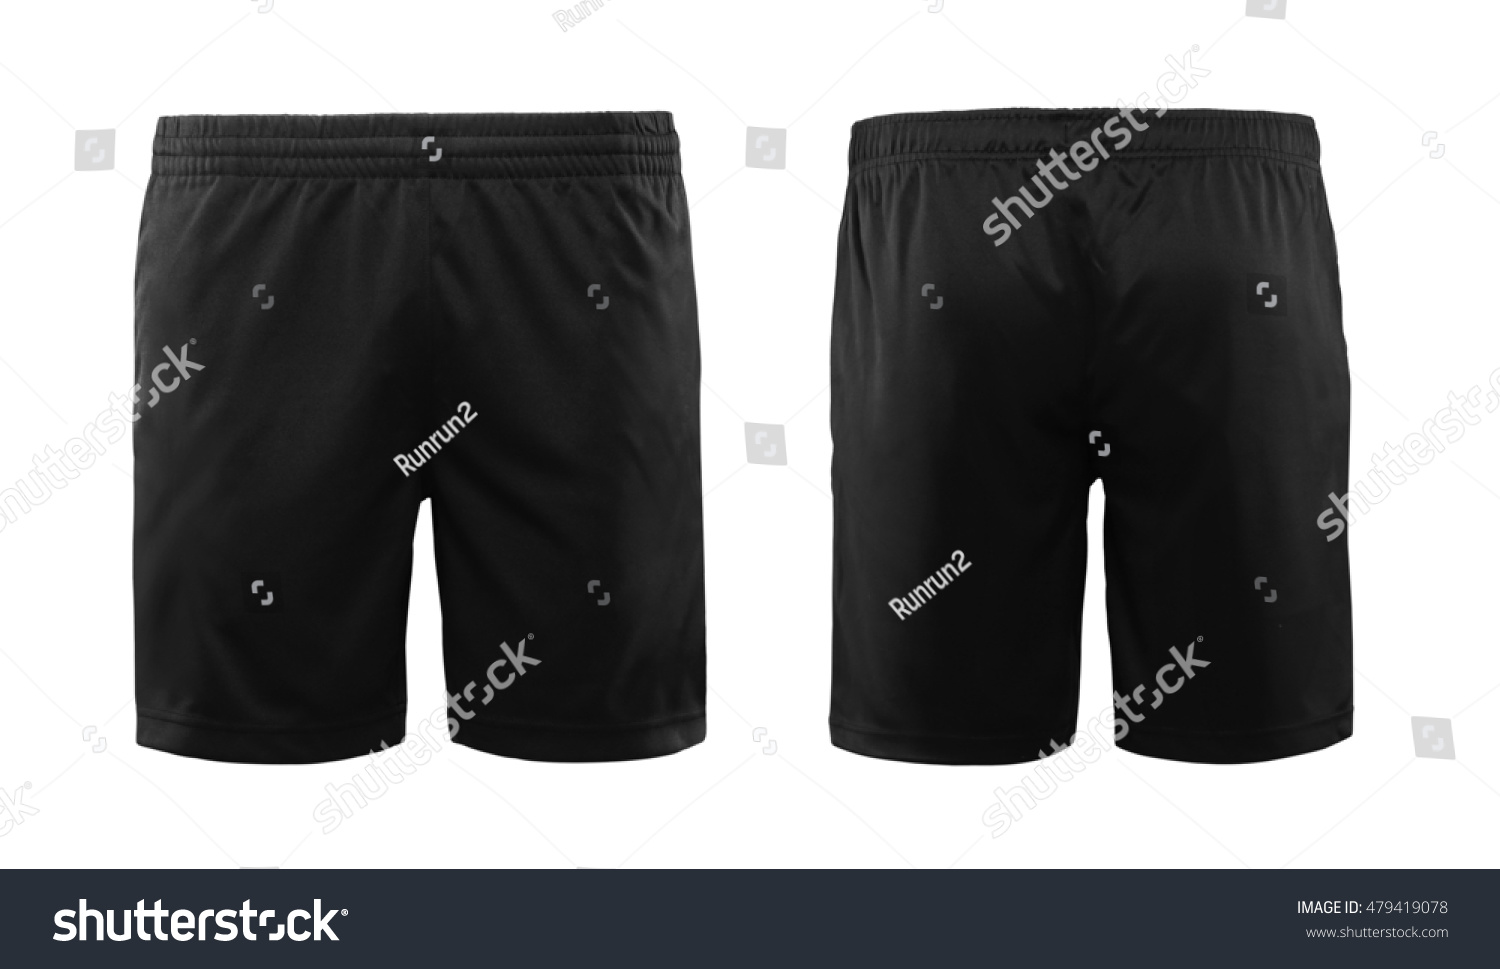 454,541 Black shorts Images, Stock Photos & Vectors | Shutterstock